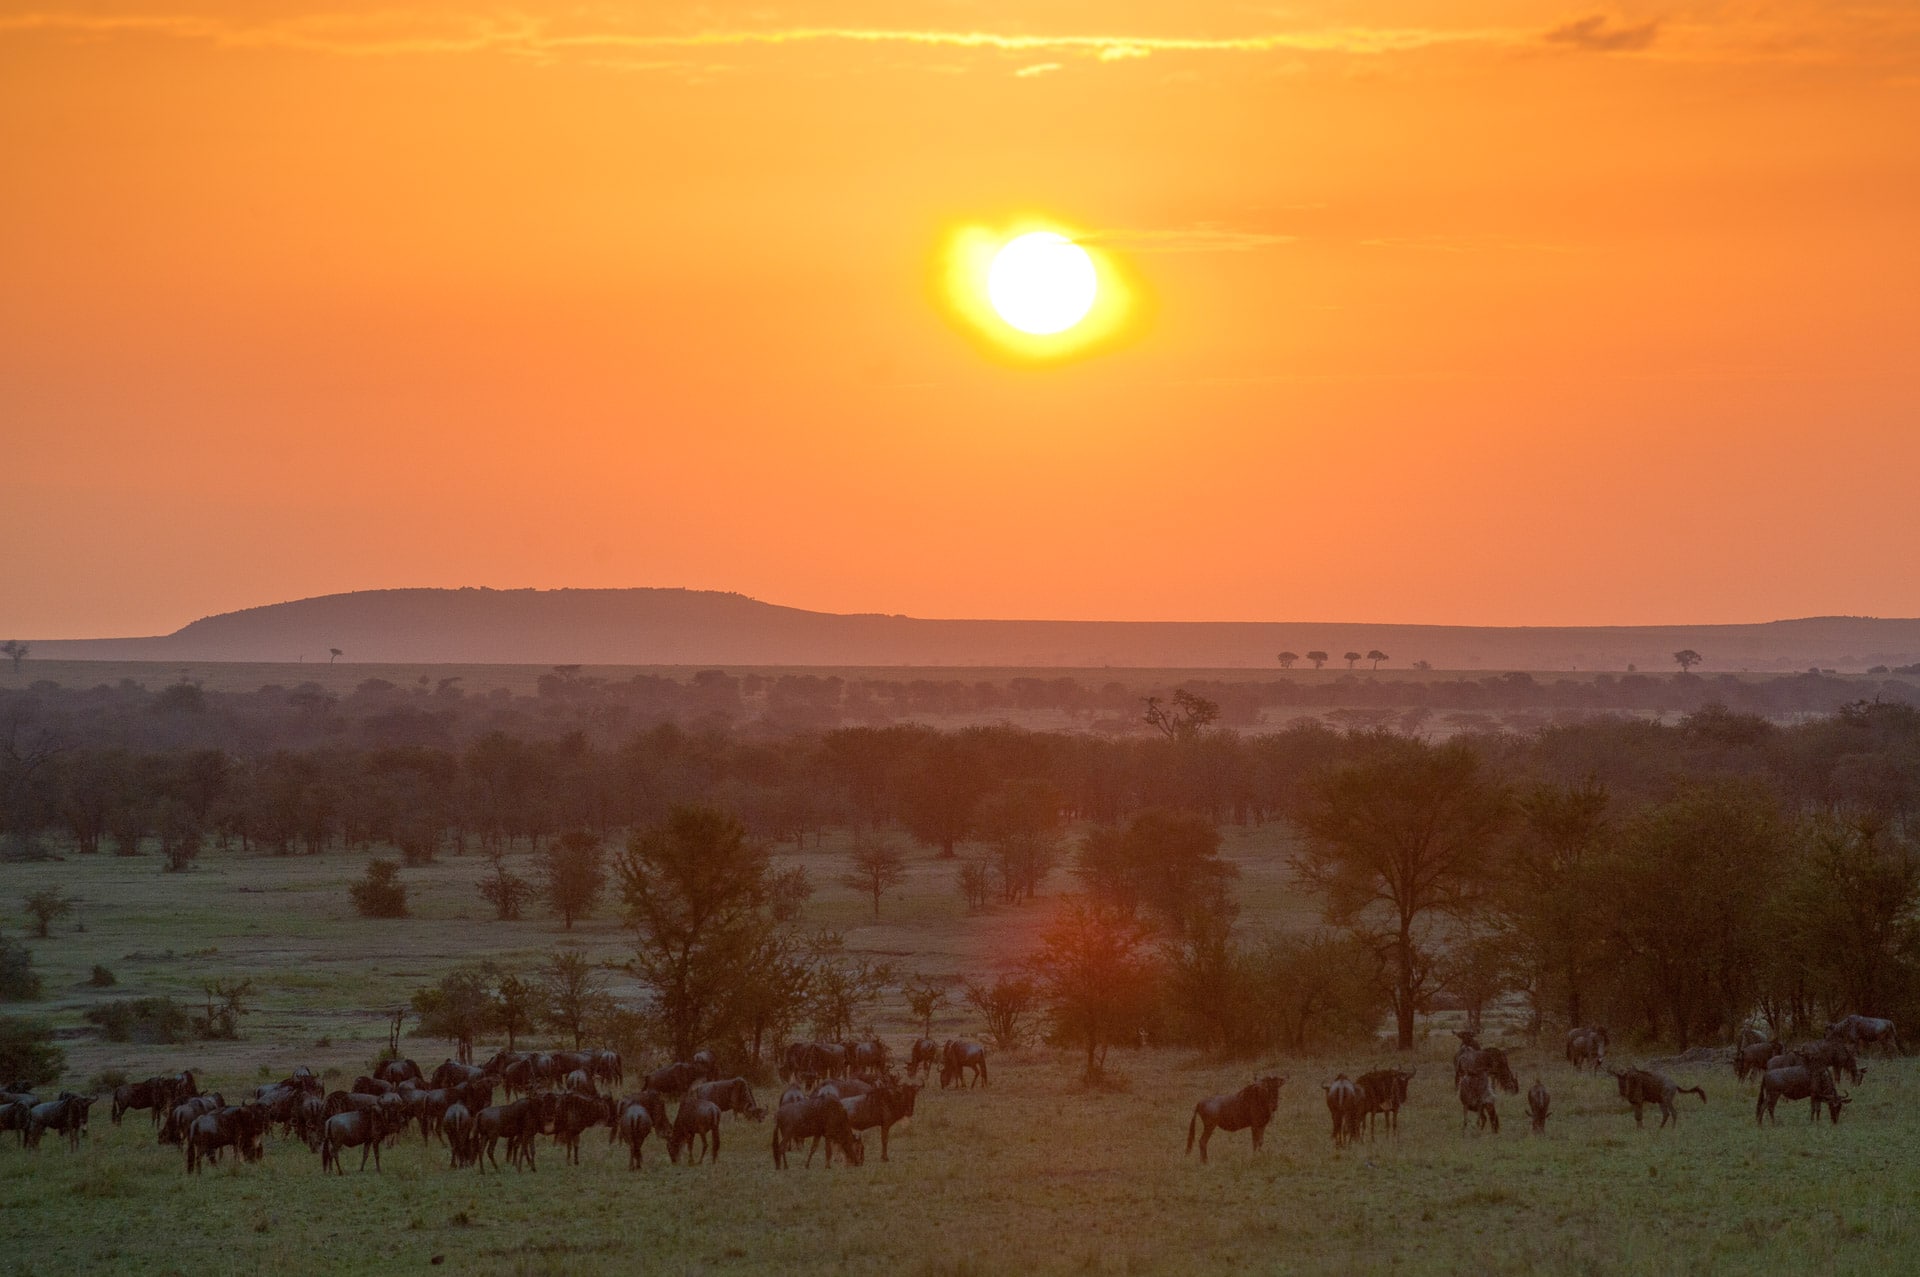 Serengeti in Tansania - Globetrotter Select